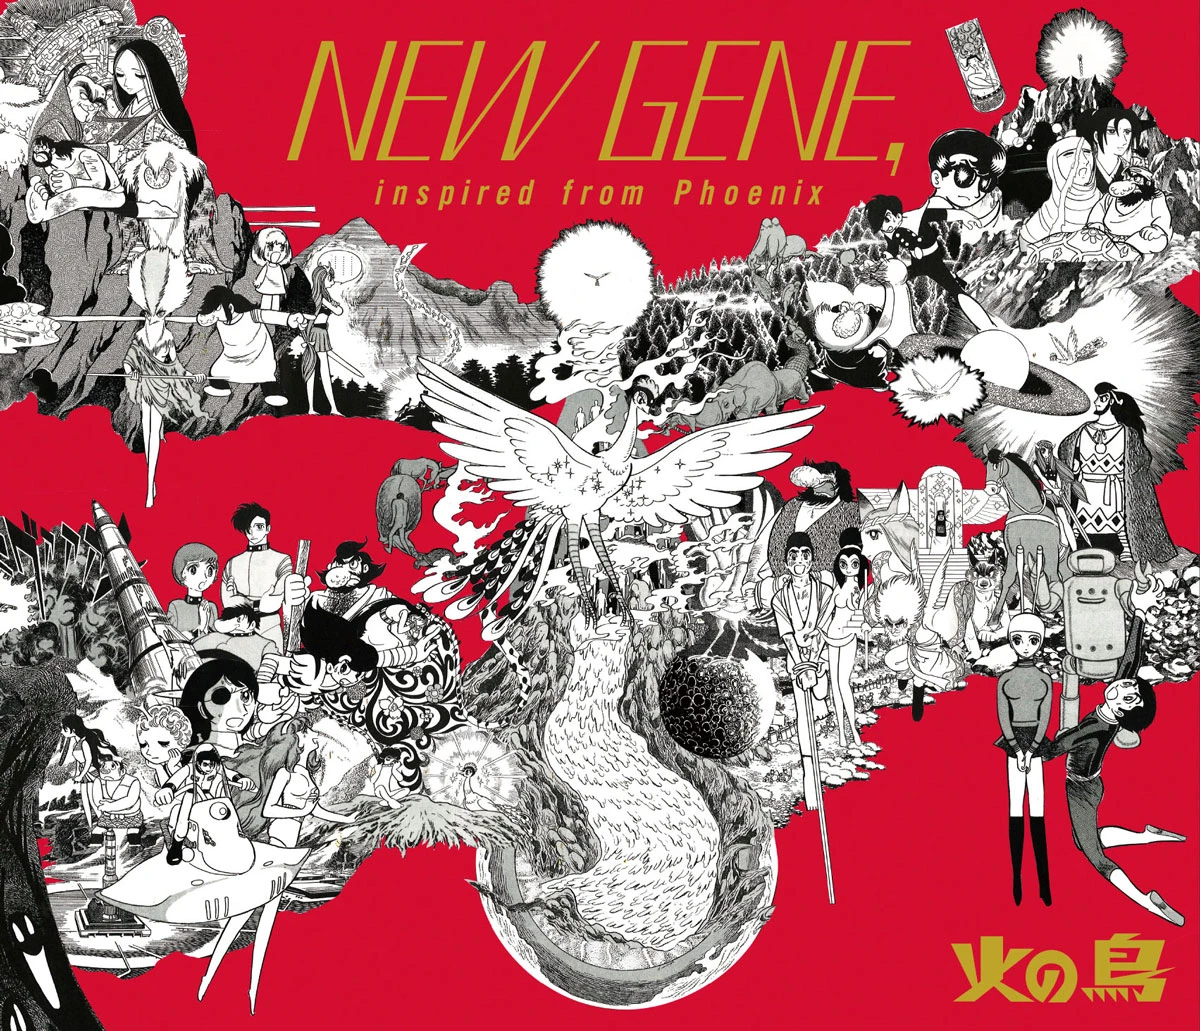 『NEW GENE, inspired from Phoenix』ジャケット／(c)Tezuka Productions